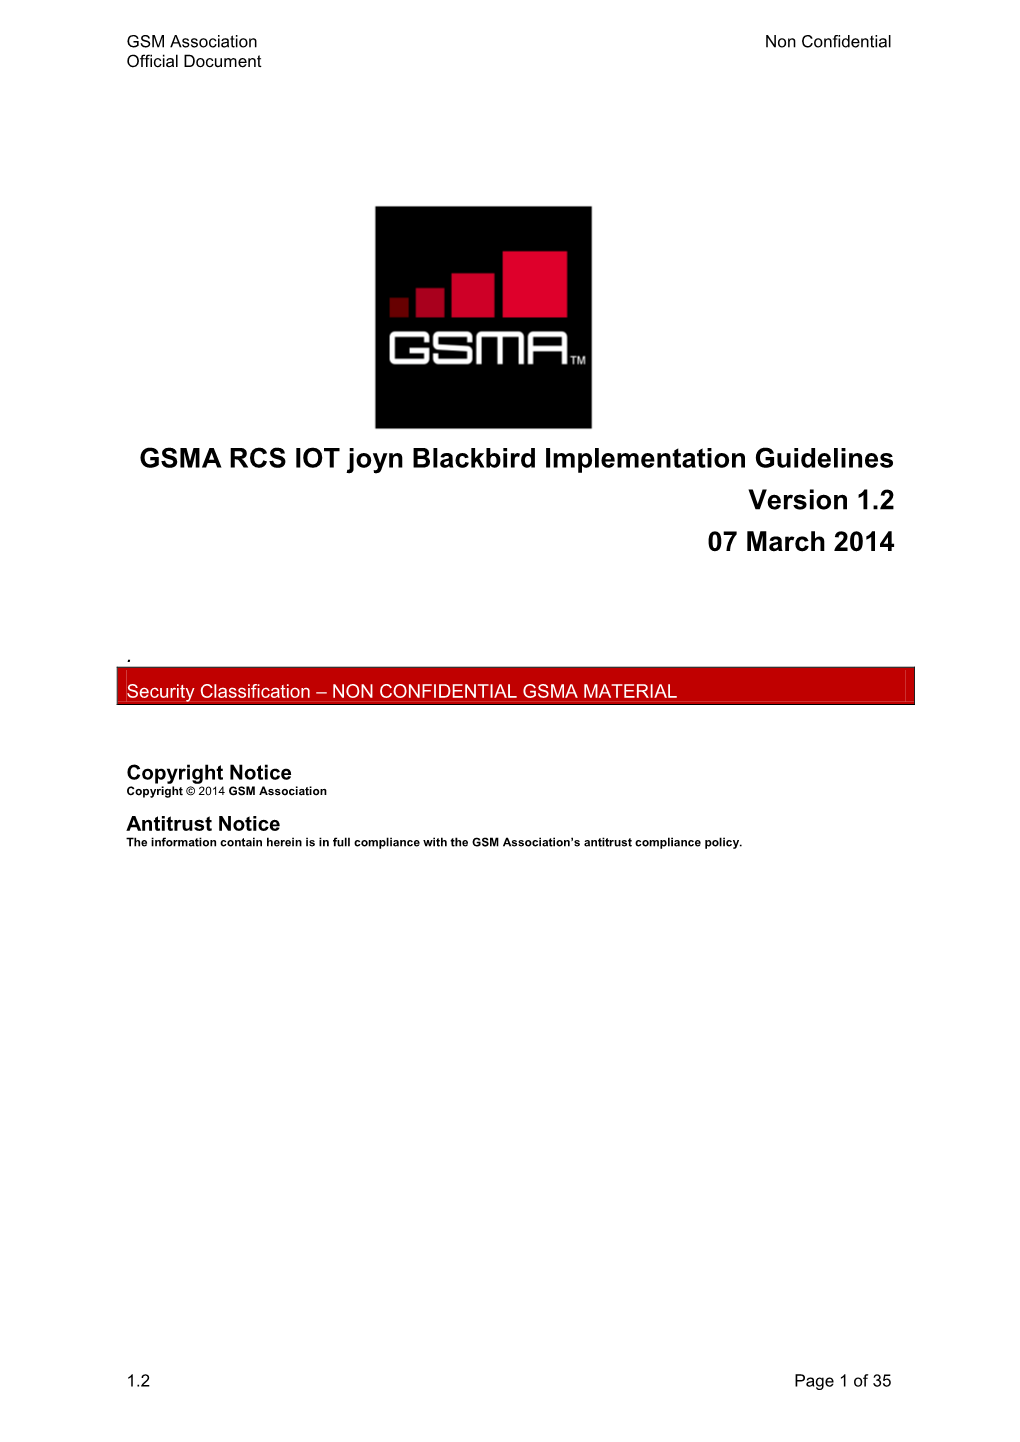 GSMA RCS IOT Joyn Blackbird Implementation Guidelines Version 1.2 07 March 2014